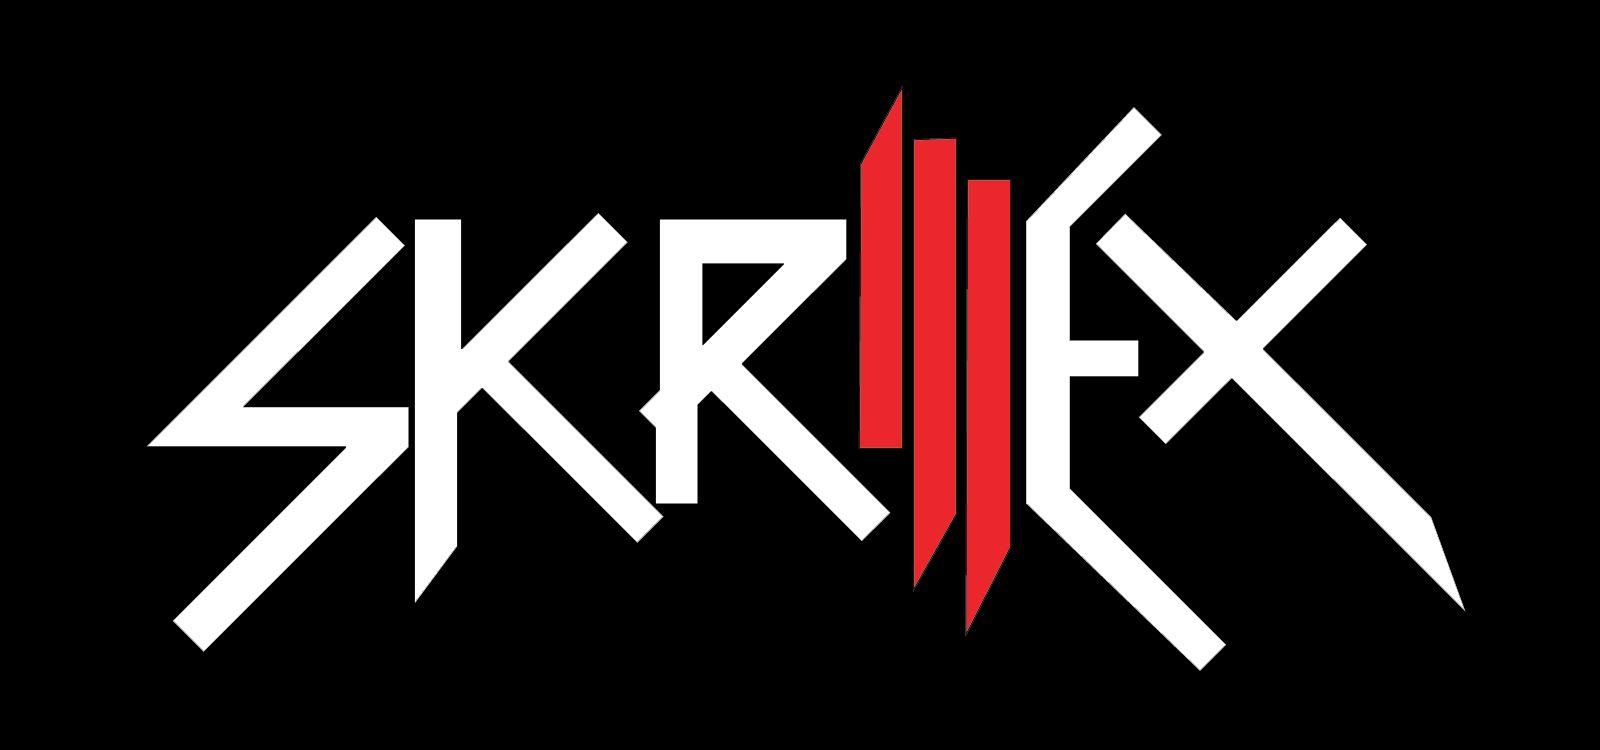 Skrillex Logo - Skrillex symbol | All logos world in 2019 | Skrillex, Dubstep, Music